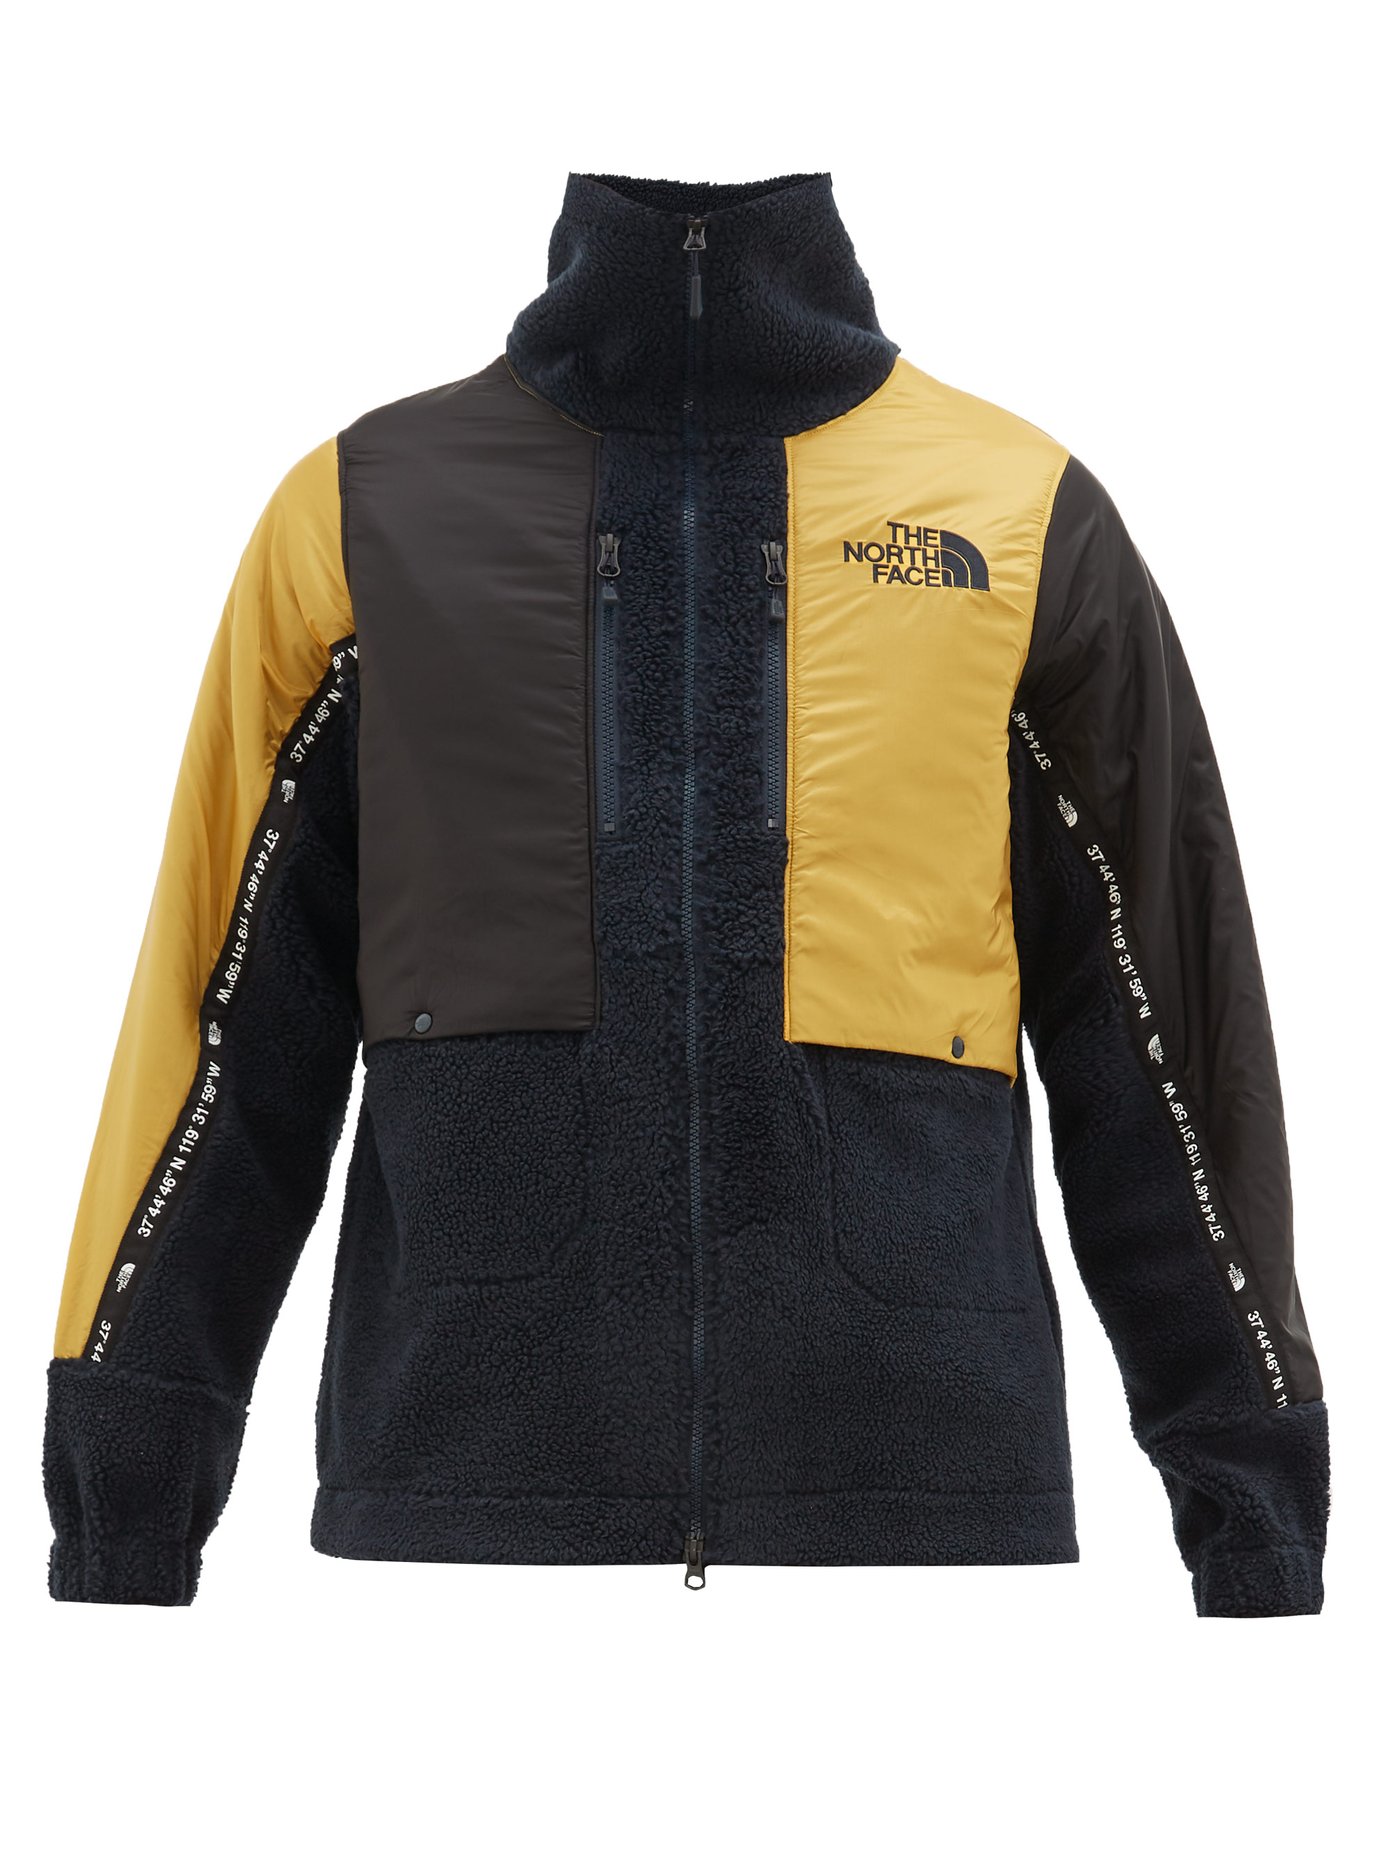 North Face Fleece Jacket Size Chart